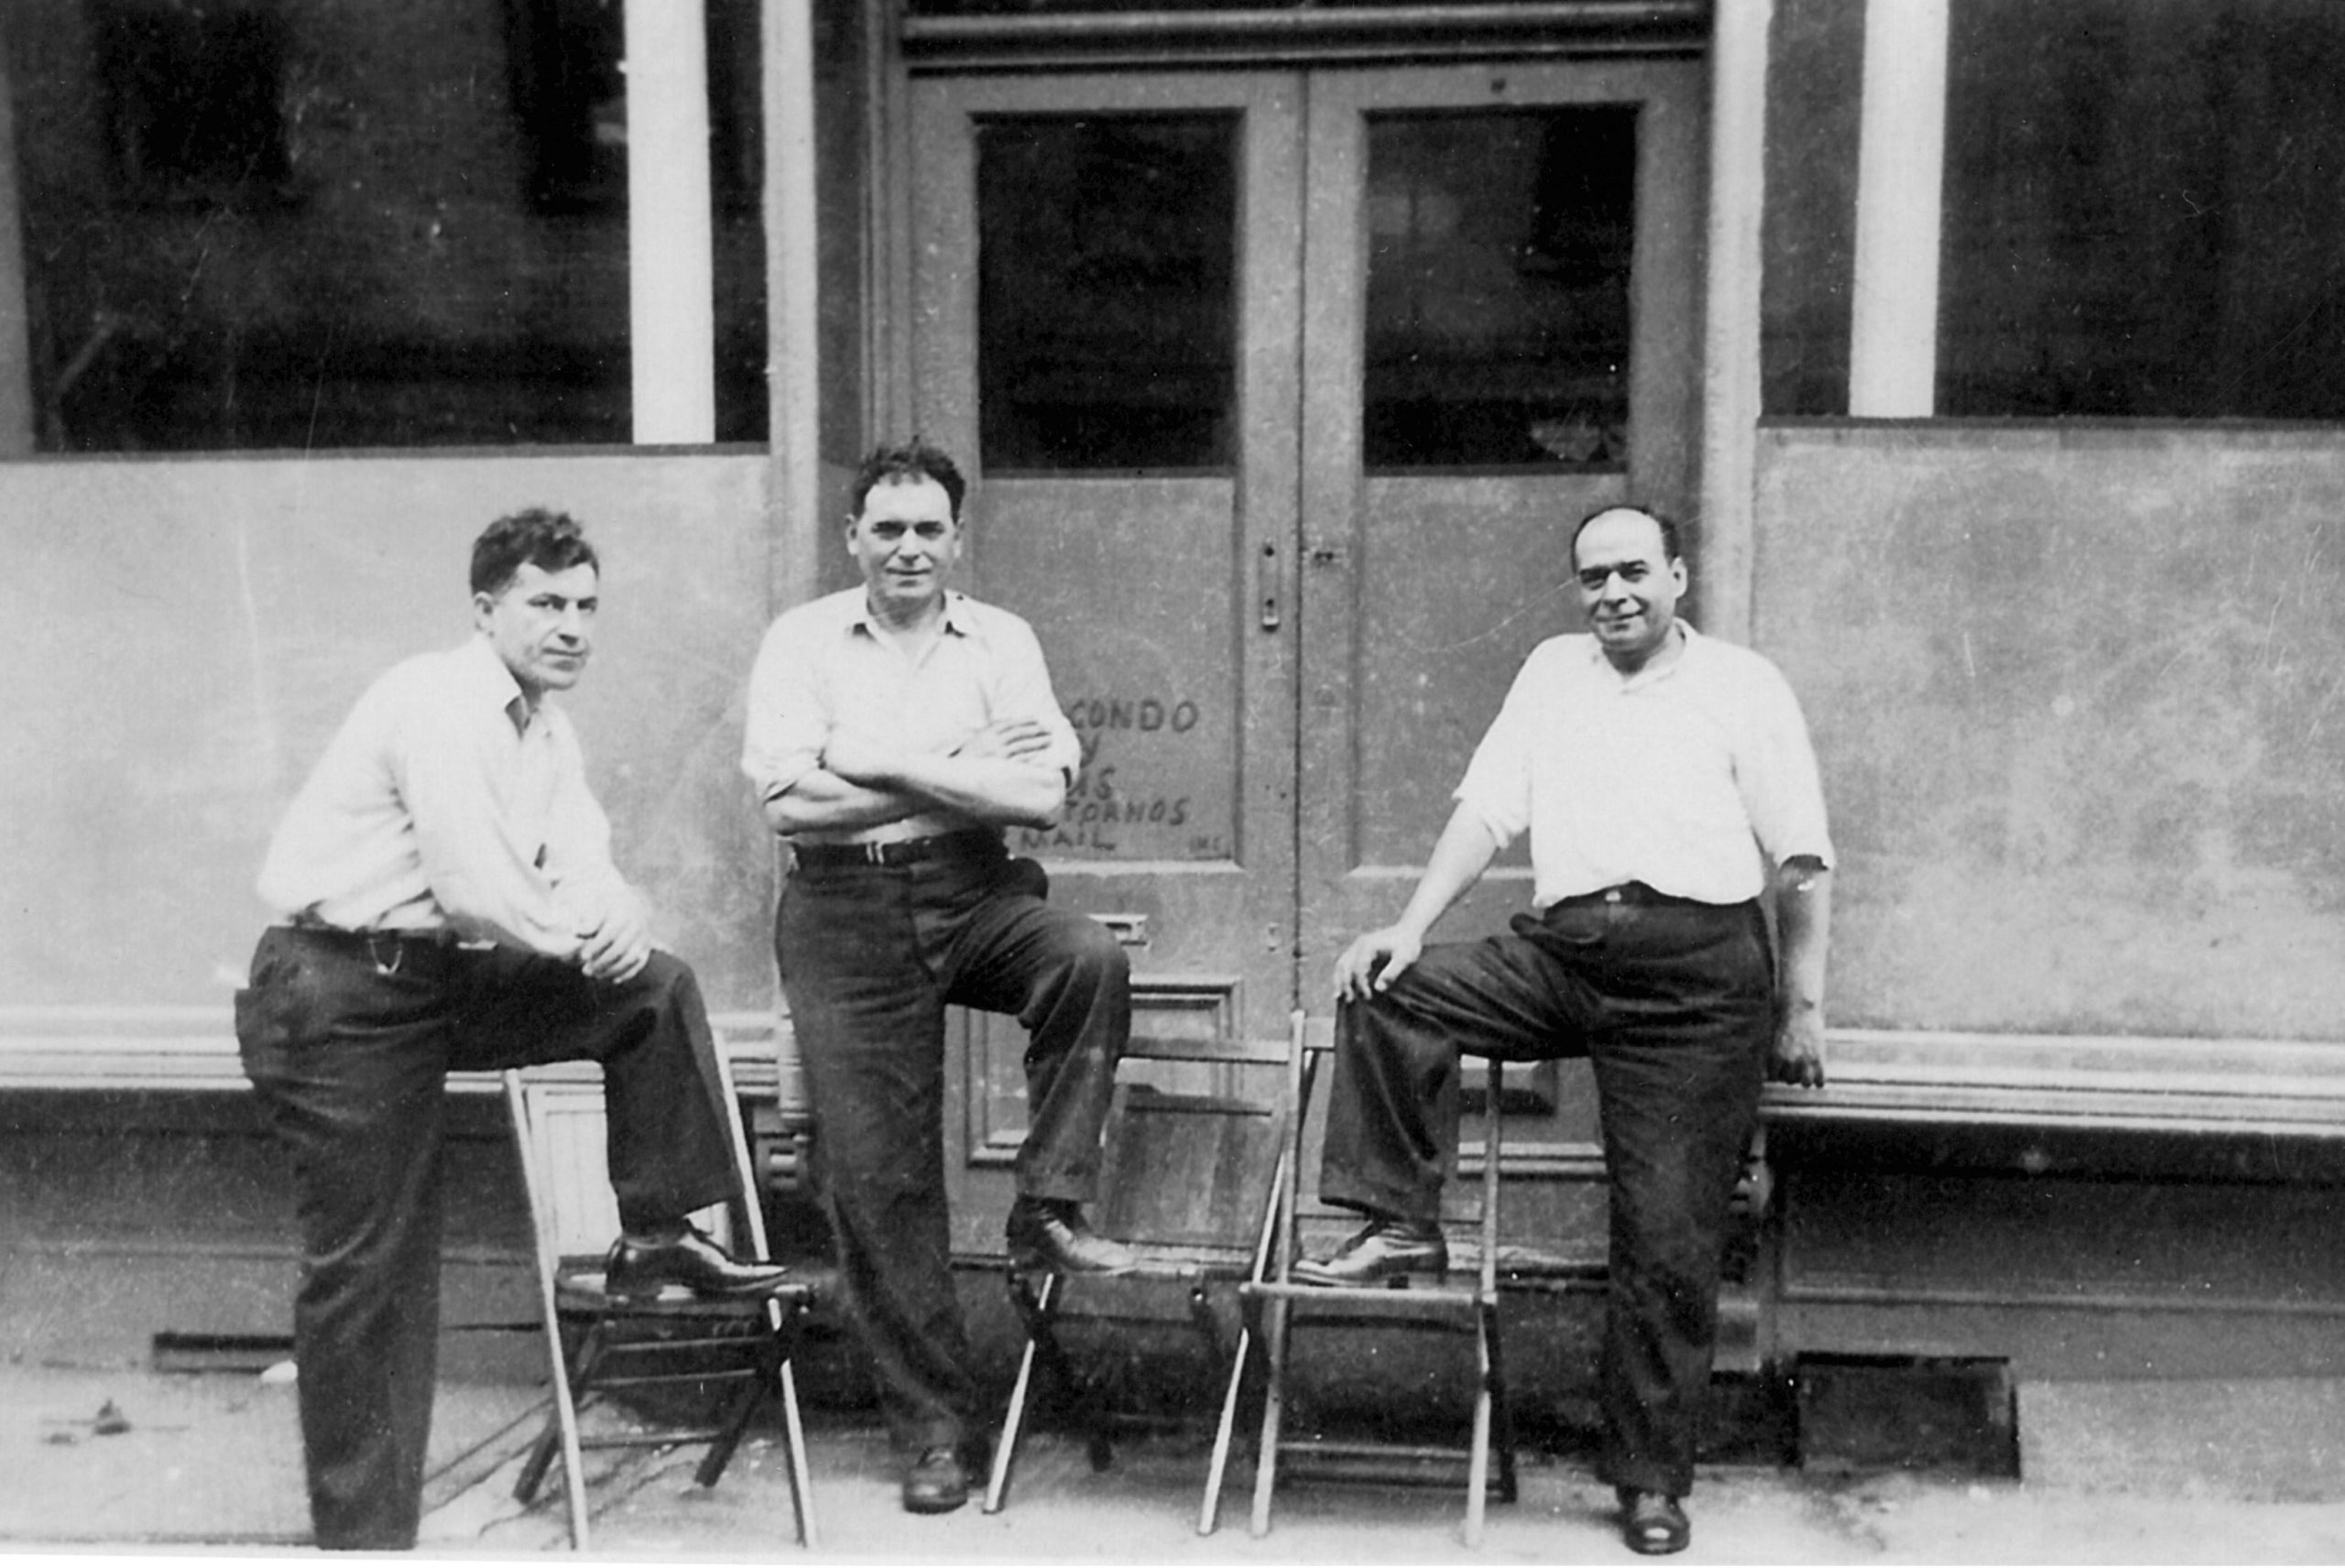 Fundadores da sociedade Bergondo y sus contornos en Nova York, anos vinte (Arquivo Municipal de Bergondo, foto presentada por Francisco Mosquera Muíño)